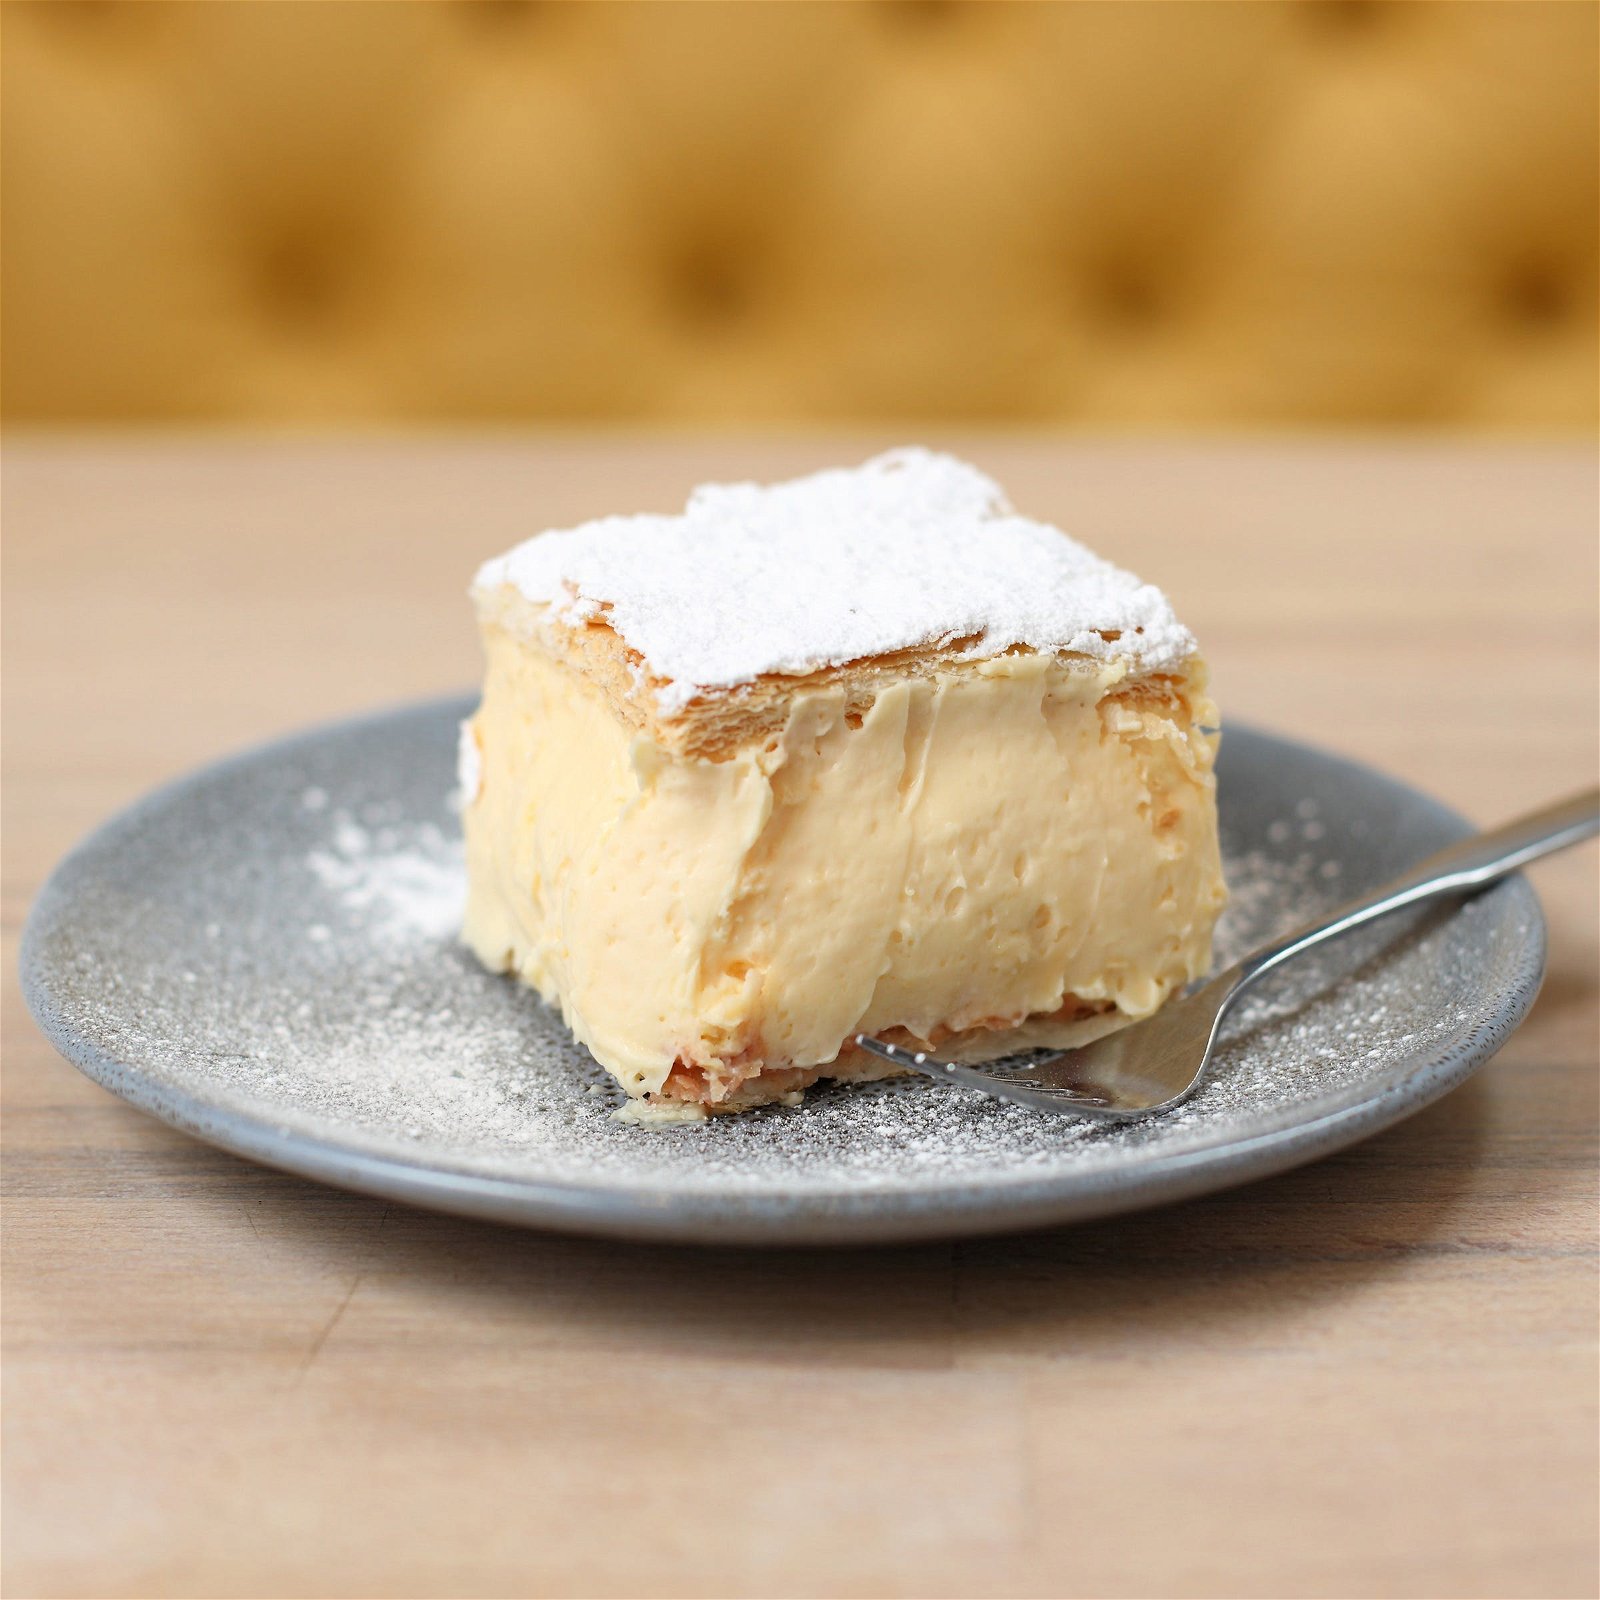 The Vanilla Slice Cafe Sorrento